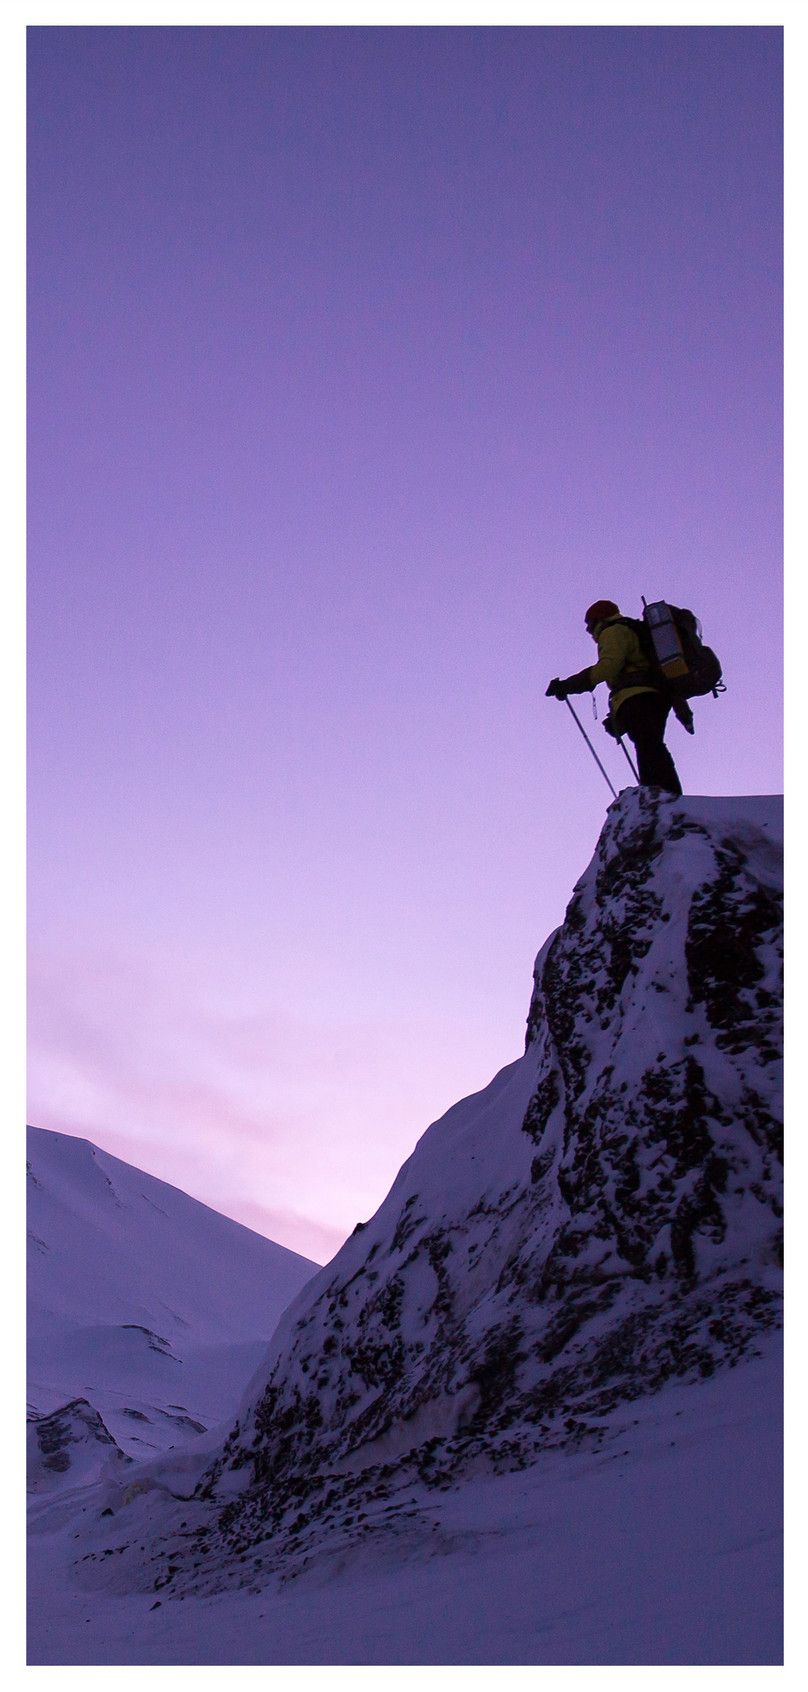 mountain climbing mobile wallpaper background image free